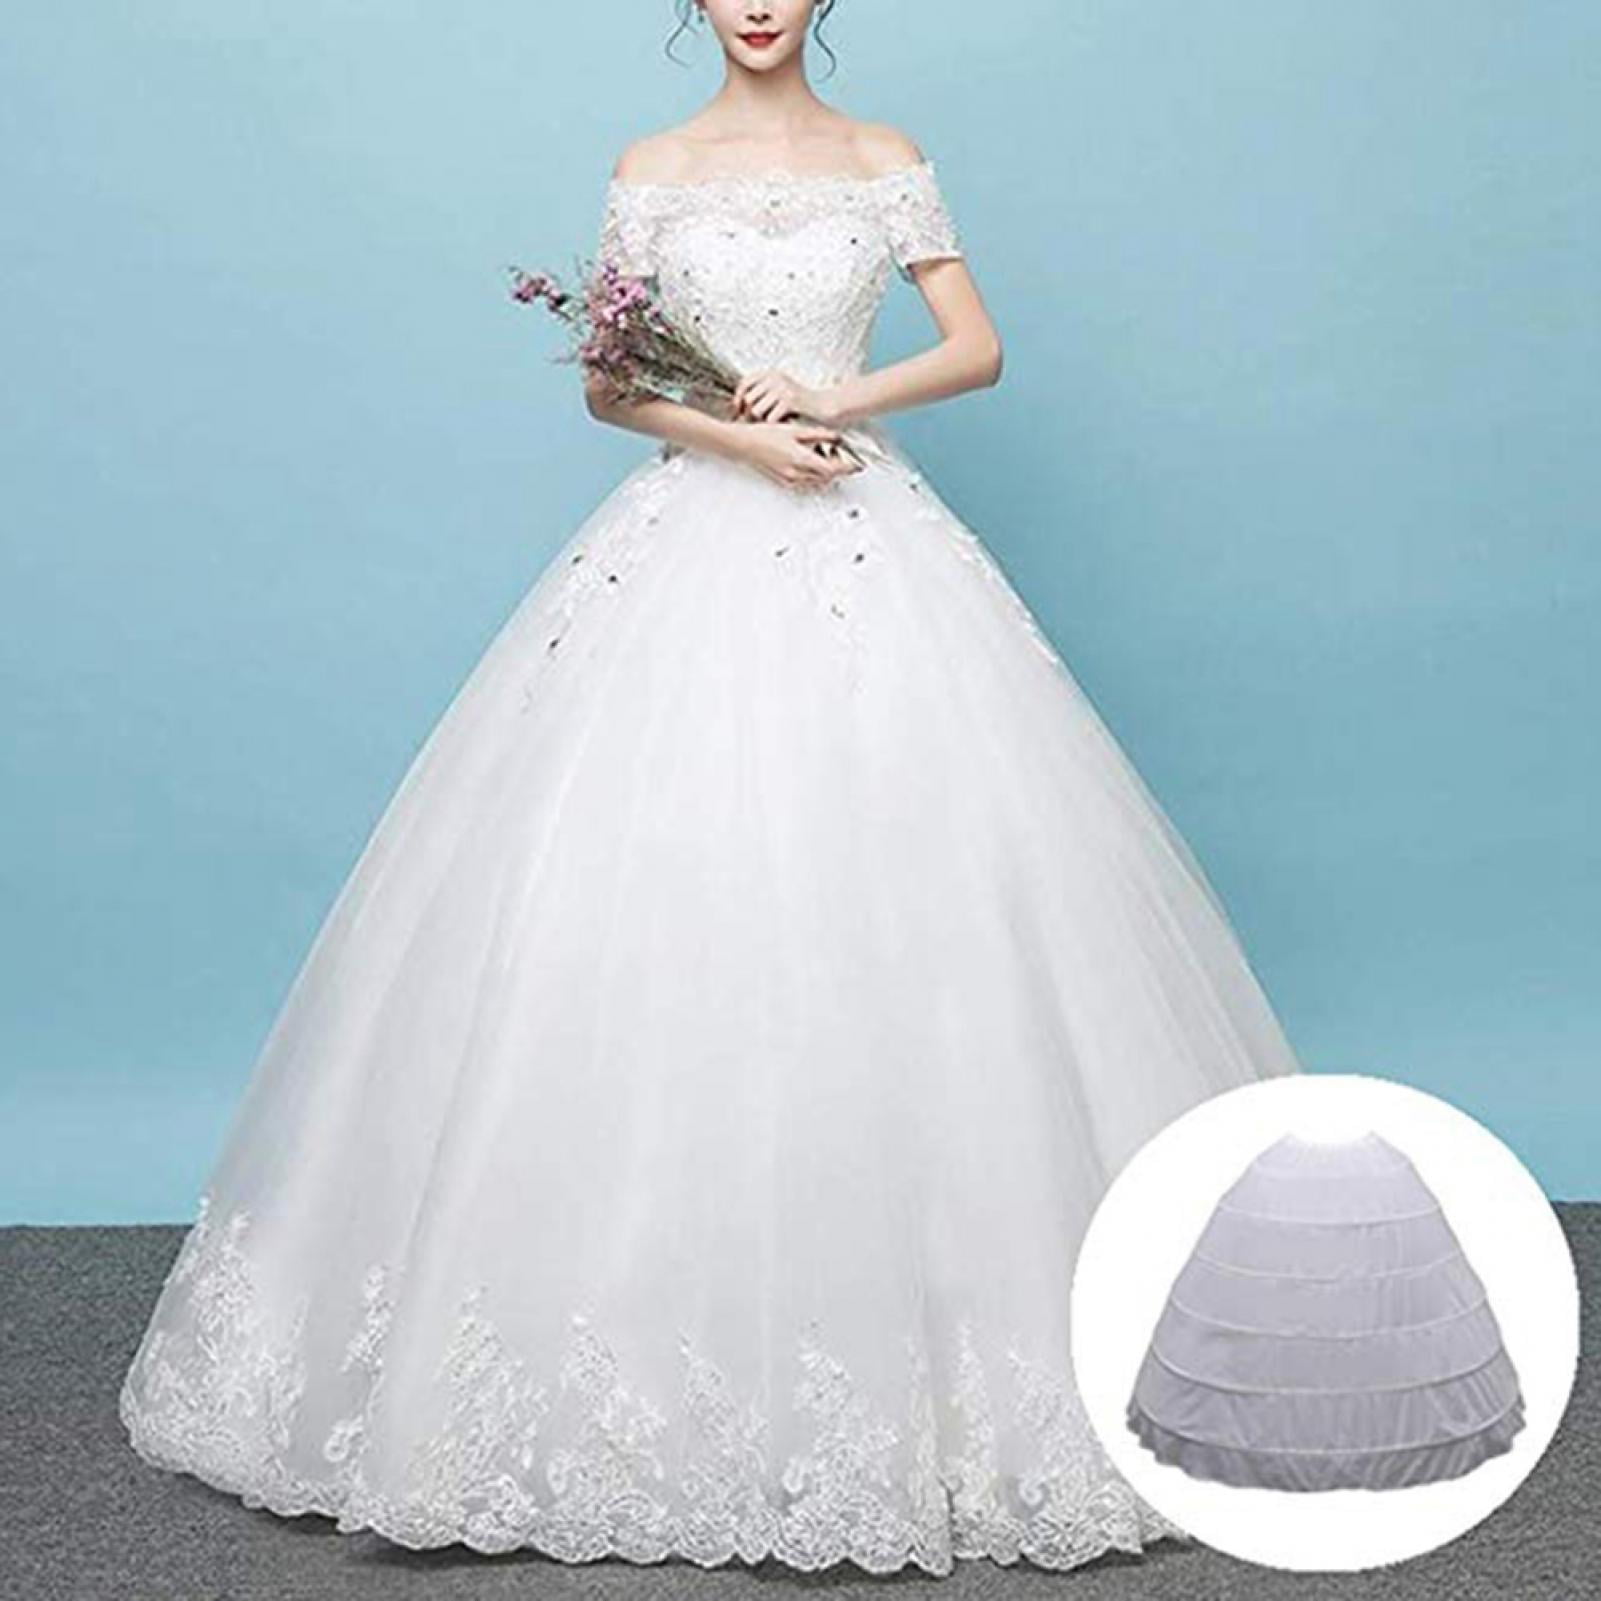 XXL New Women Wedding Bridal Petticoat Underskirt Dress Crinoline Skirt S 